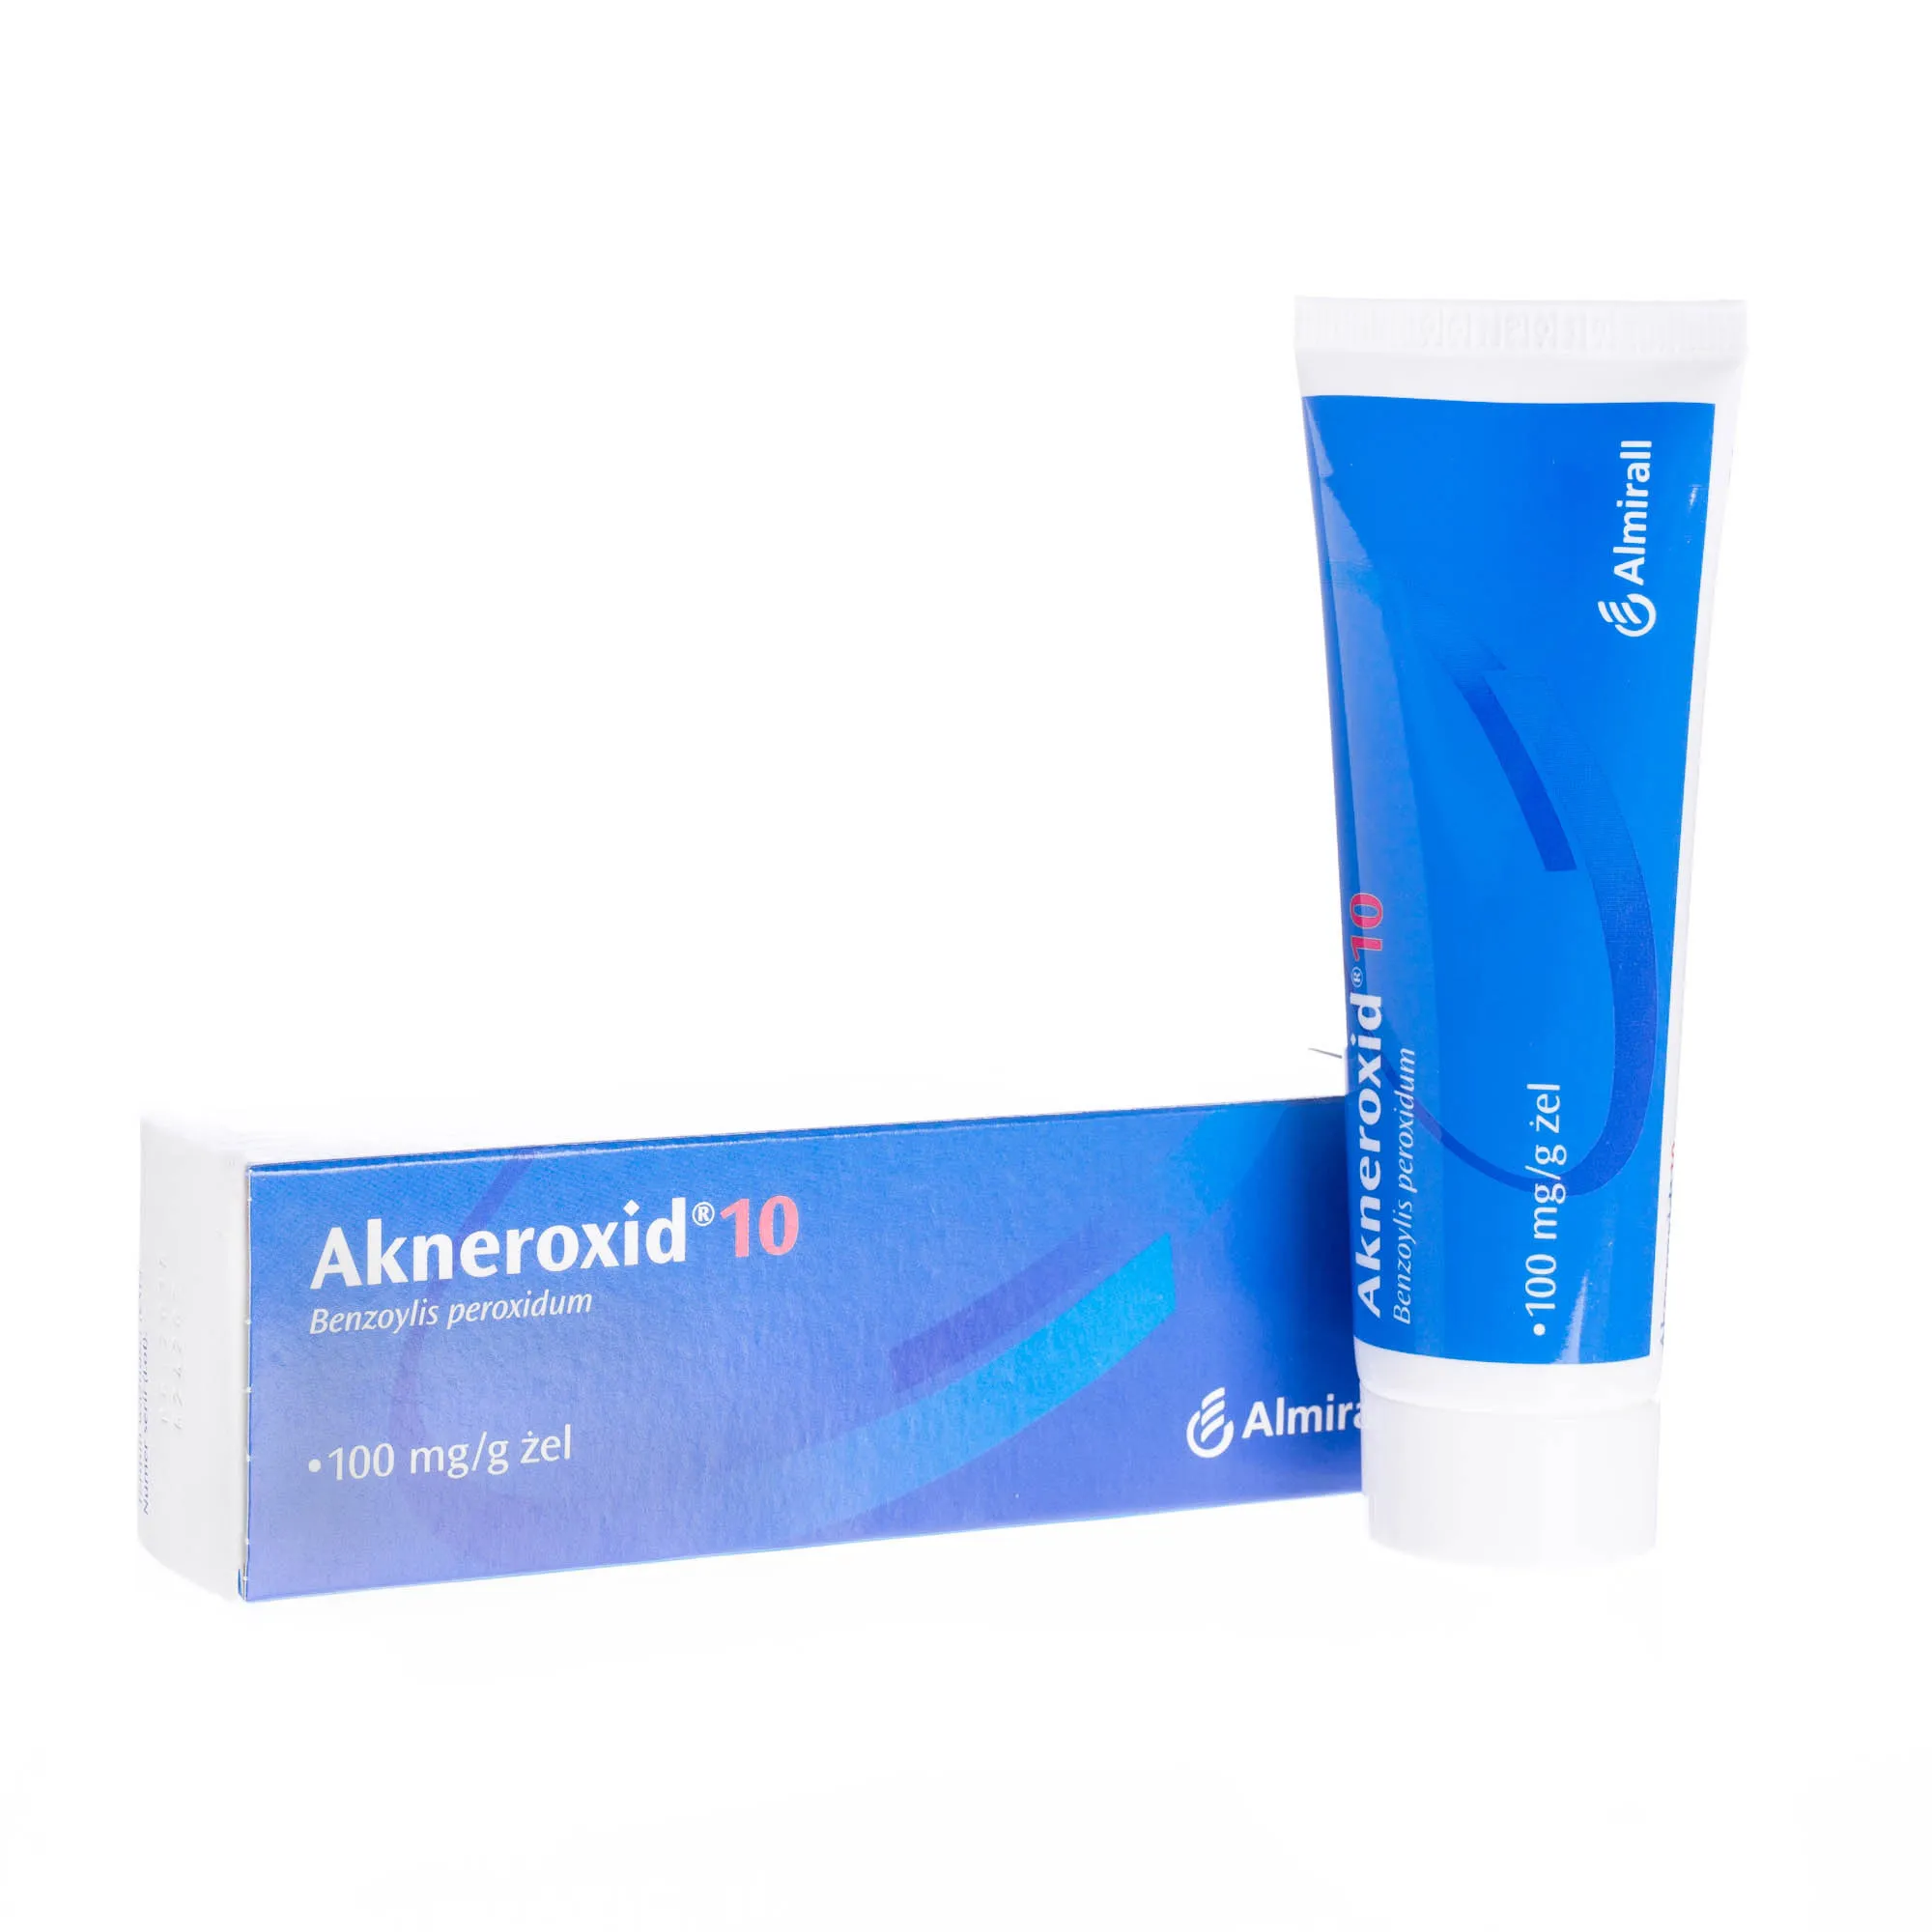 Akneroxid 10, Benzoylis peroxidum 100 mg/g żel, 50 g